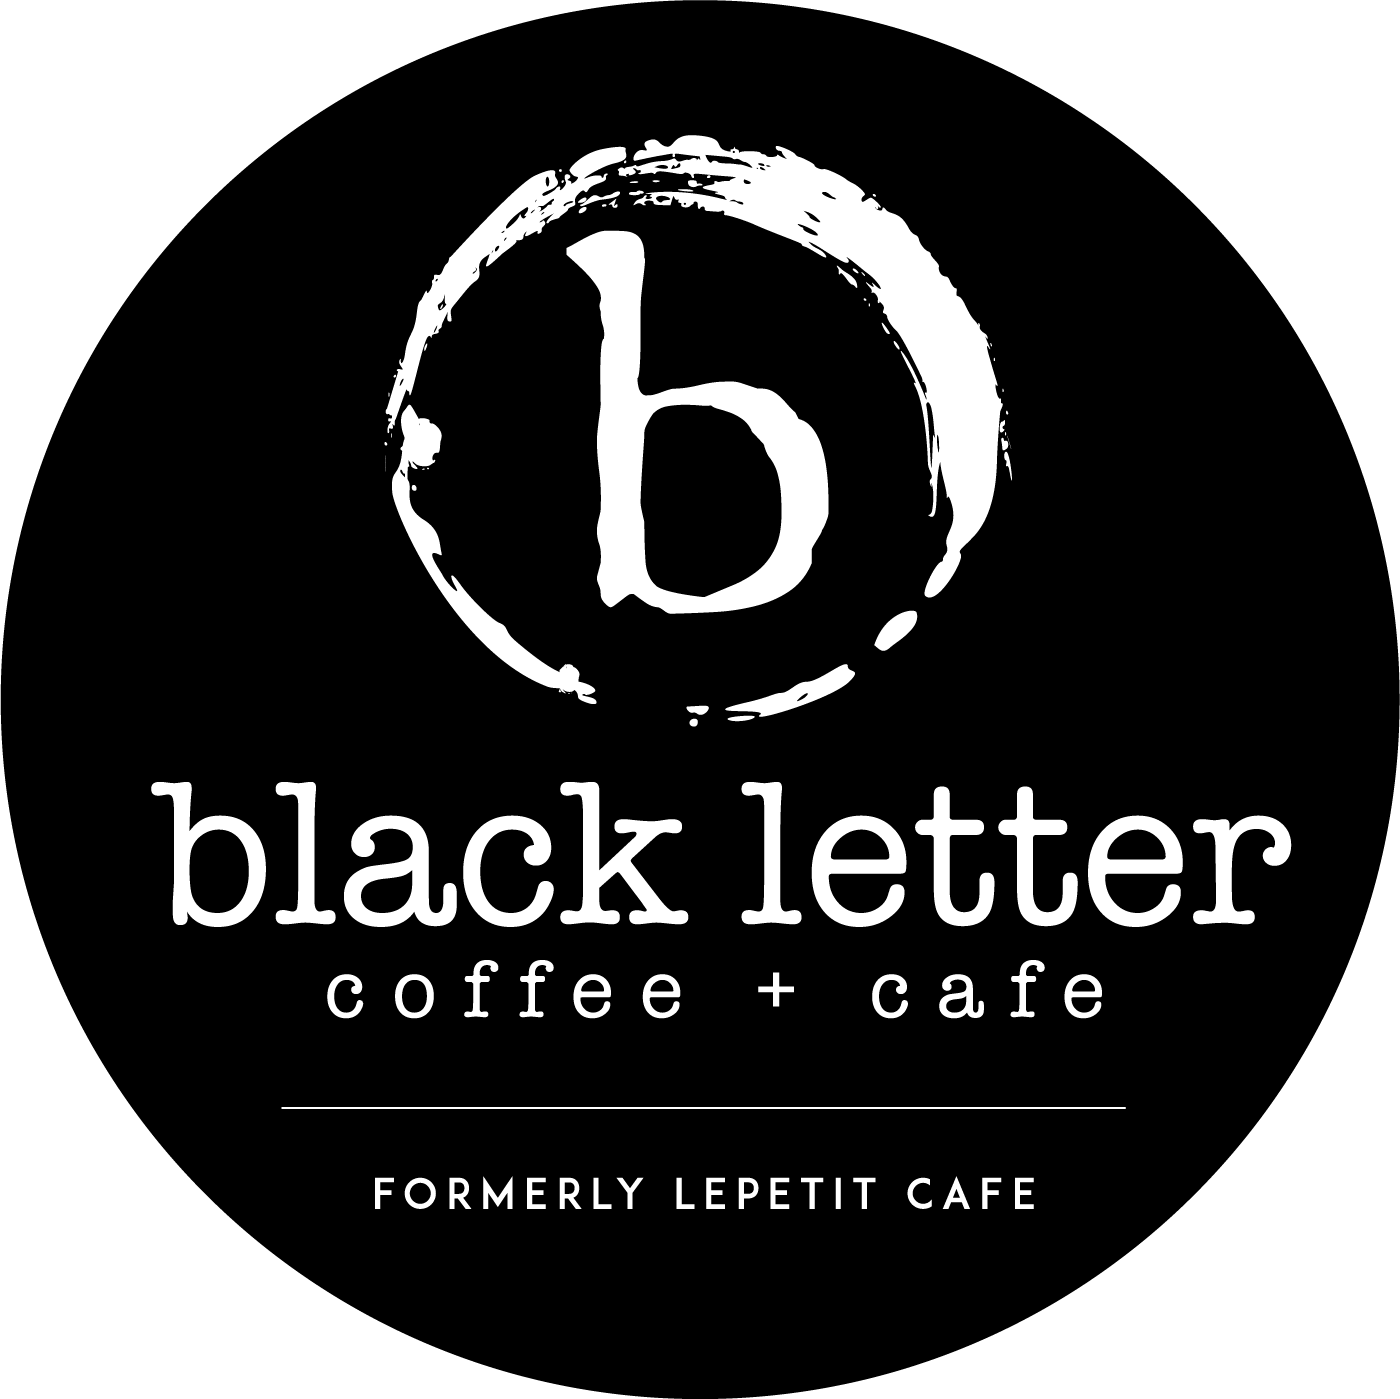 Black Letter Coffee + Cafe